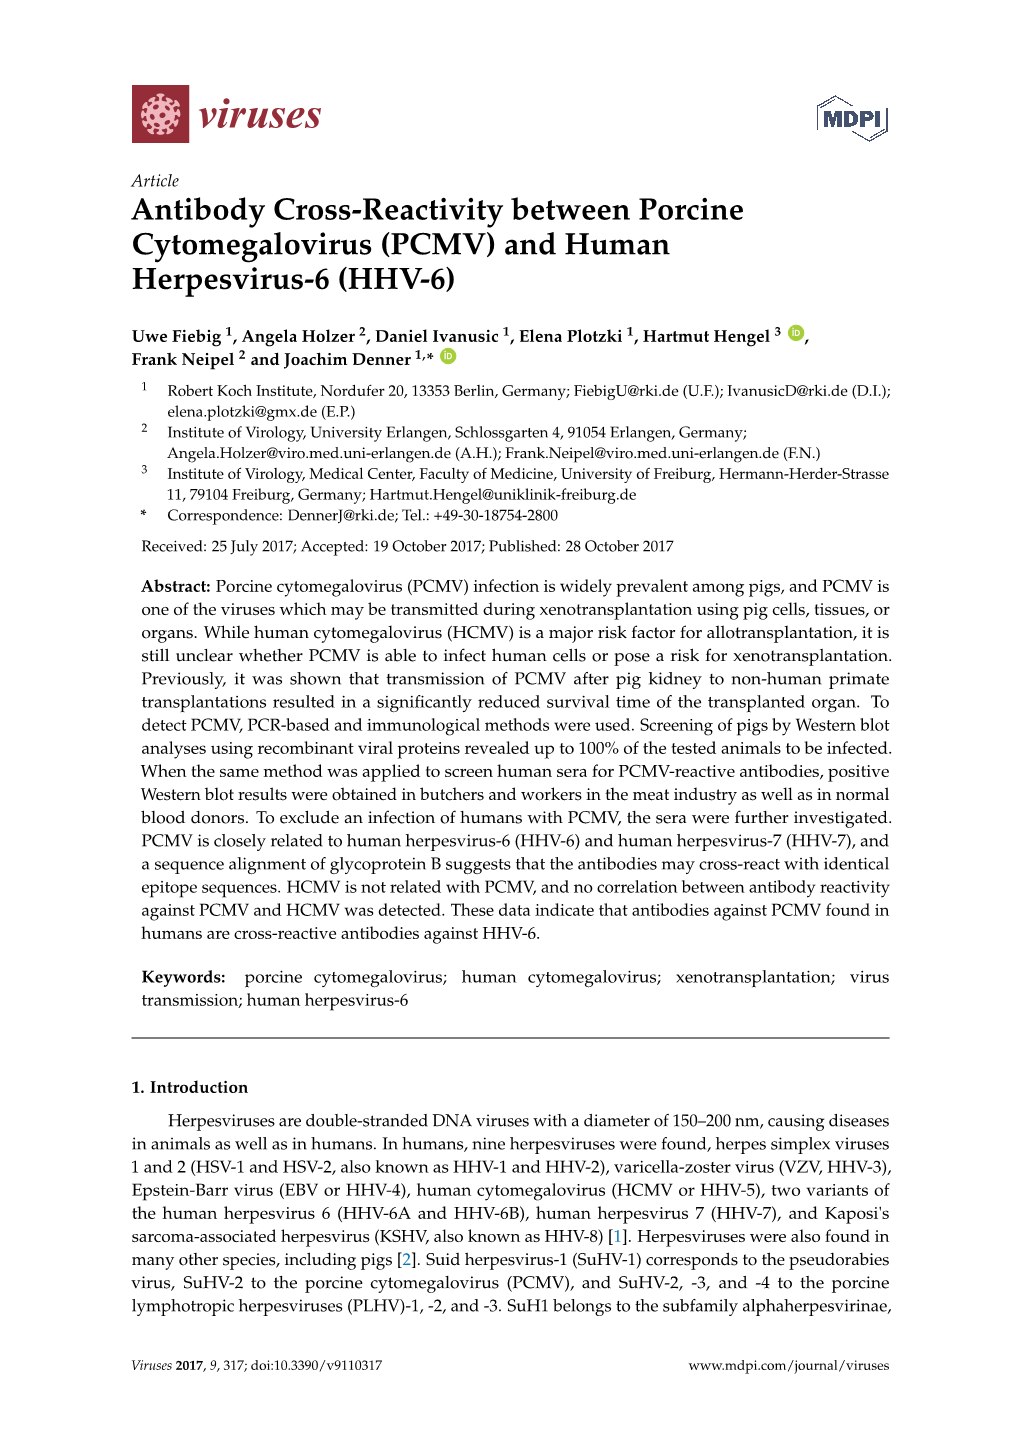 Antibody Cross-Reactivity Between Porcine Cytomegalovirus (PCMV) and Human Herpesvirus-6 (HHV-6)